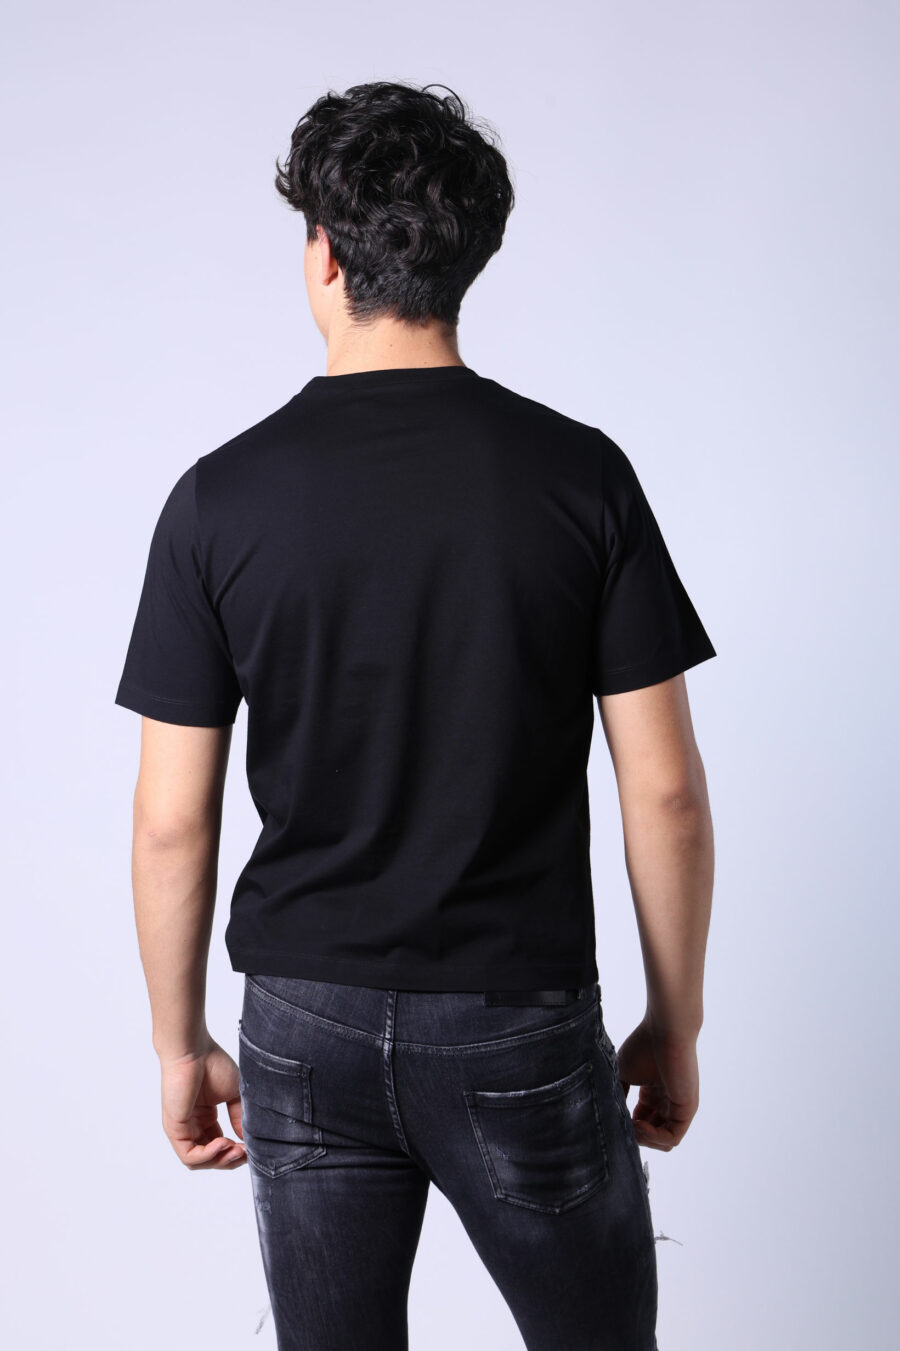 Schwarzes T-Shirt mit Maxilogo "Icon Herz Pixel" - Untitled Catalog 05334